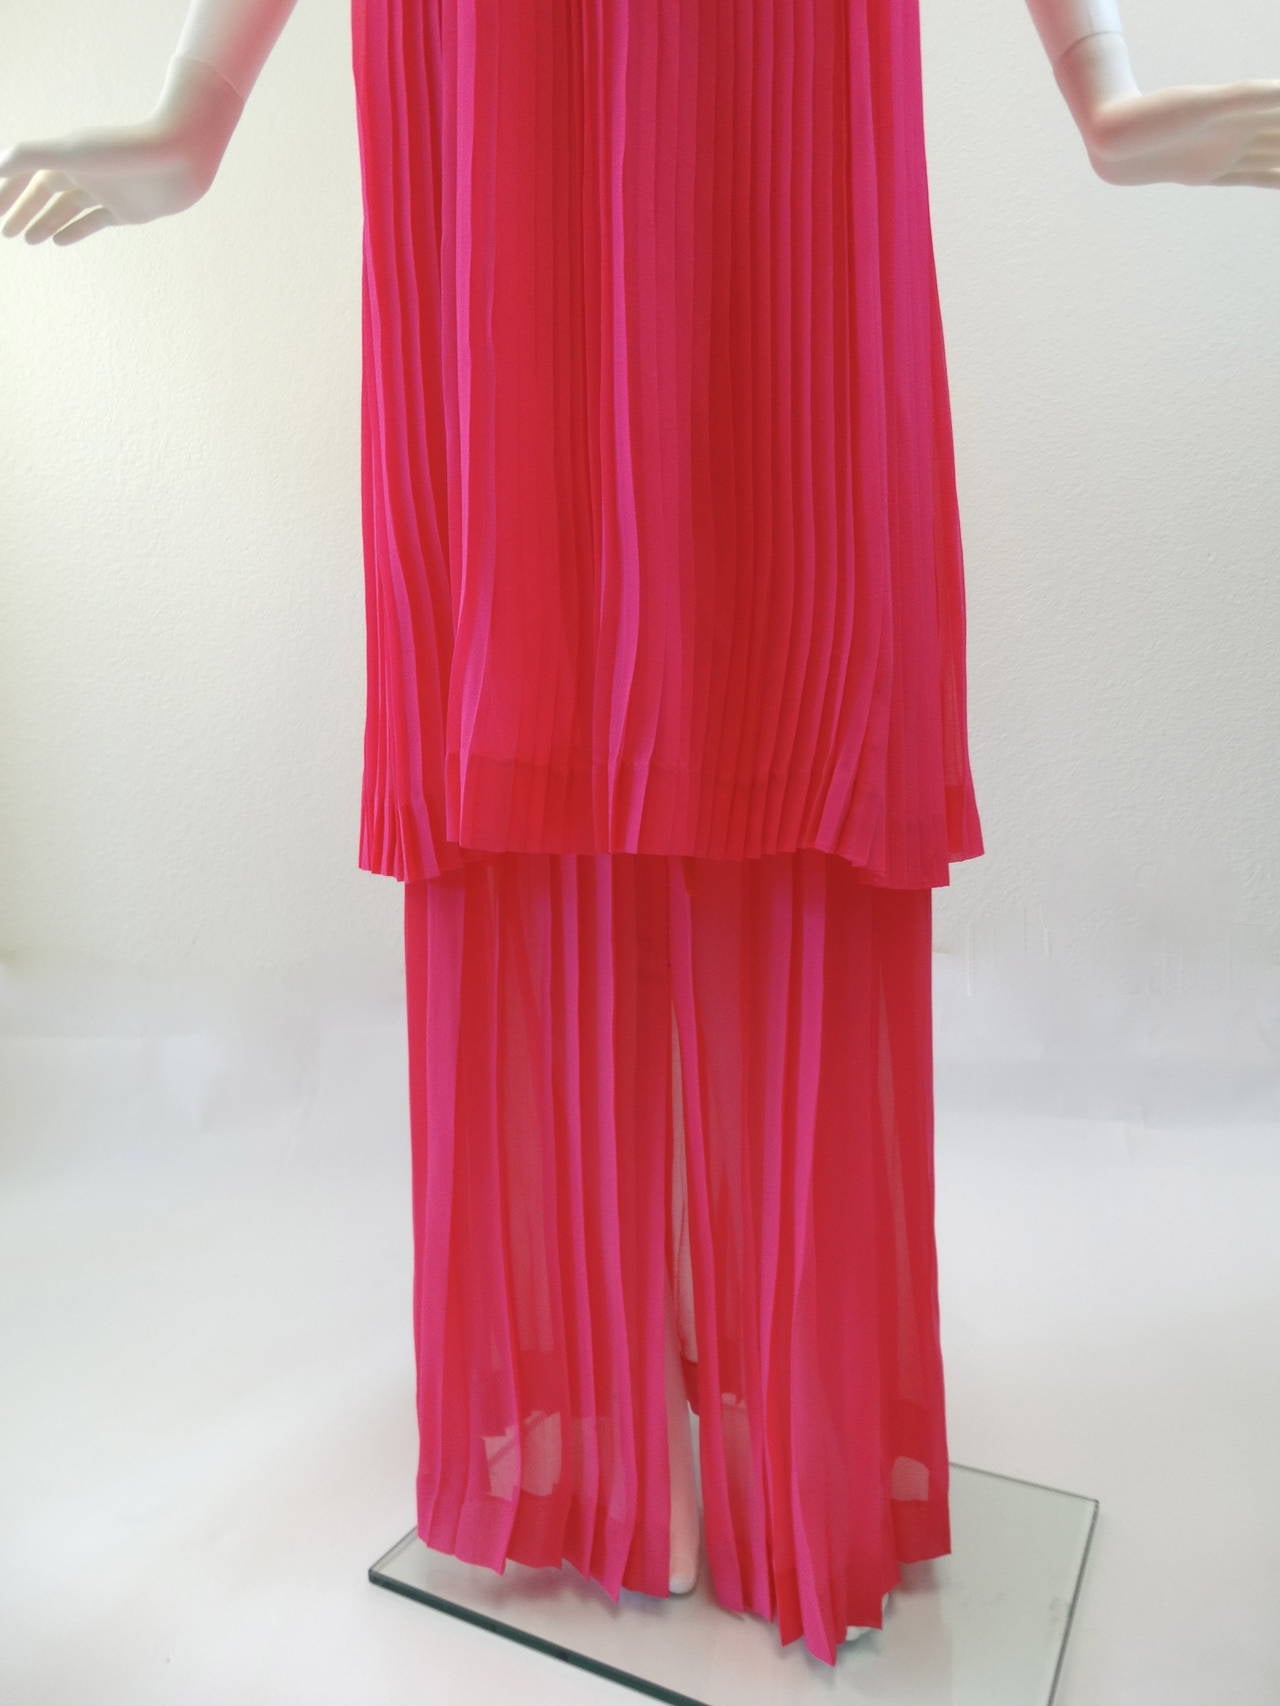 Yves Saint Laurent Electric Pink Accordion Silk Dress Skirt Set, 1980s  4